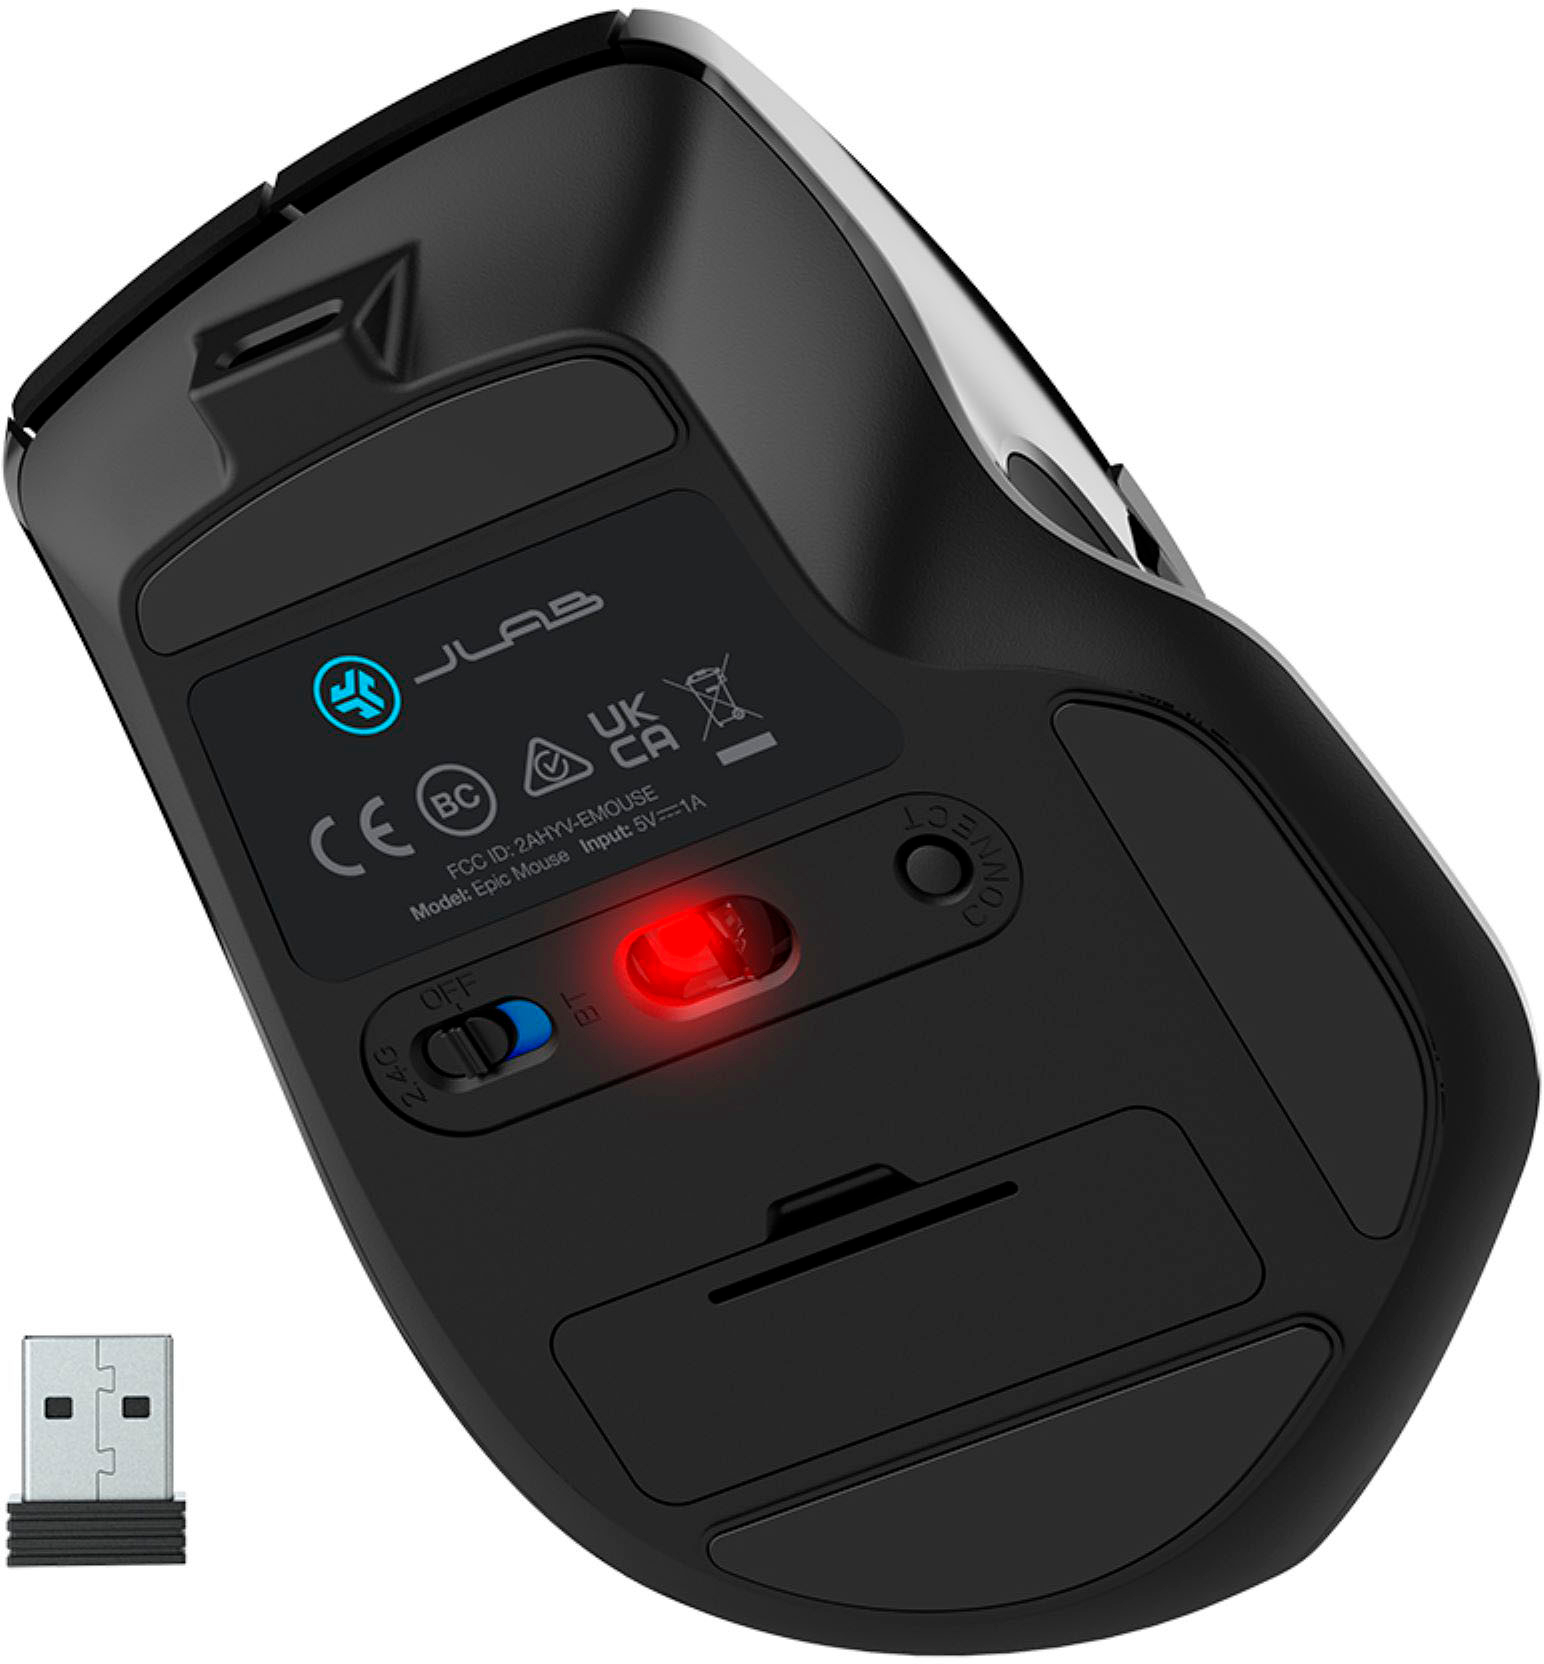 JLab Epic Wireless Mouse